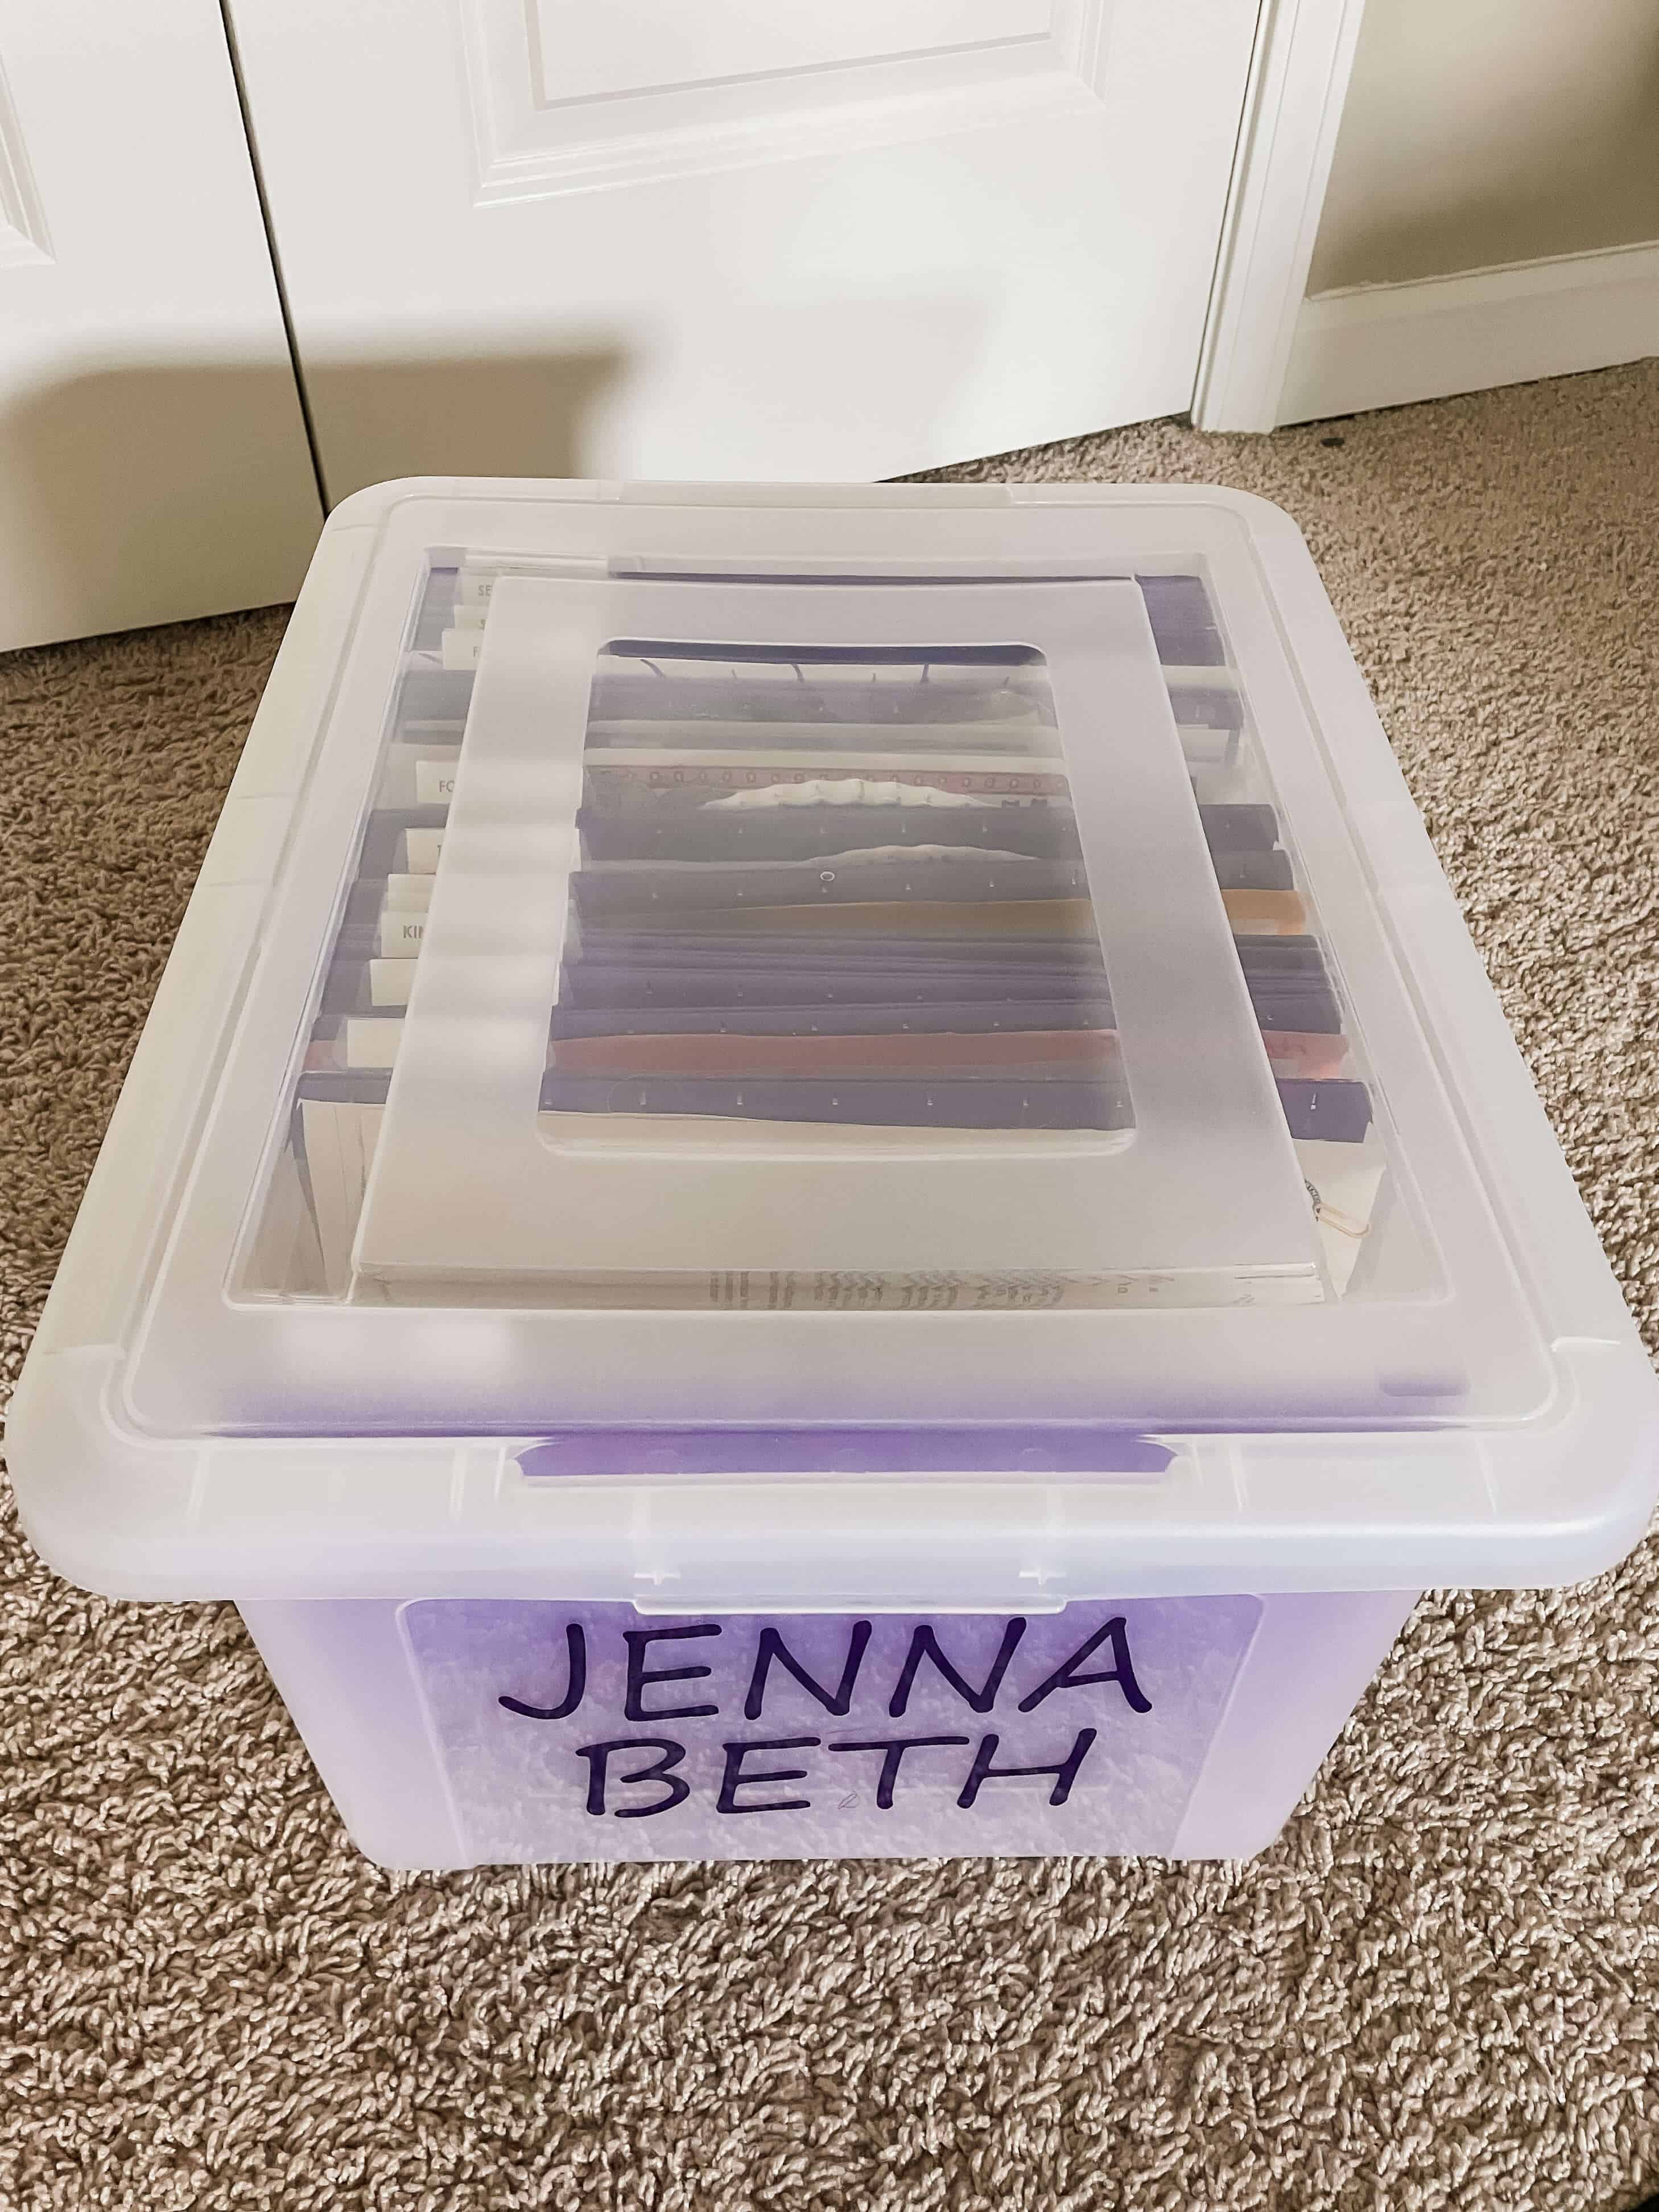 DIY memory box to organize kids school papers